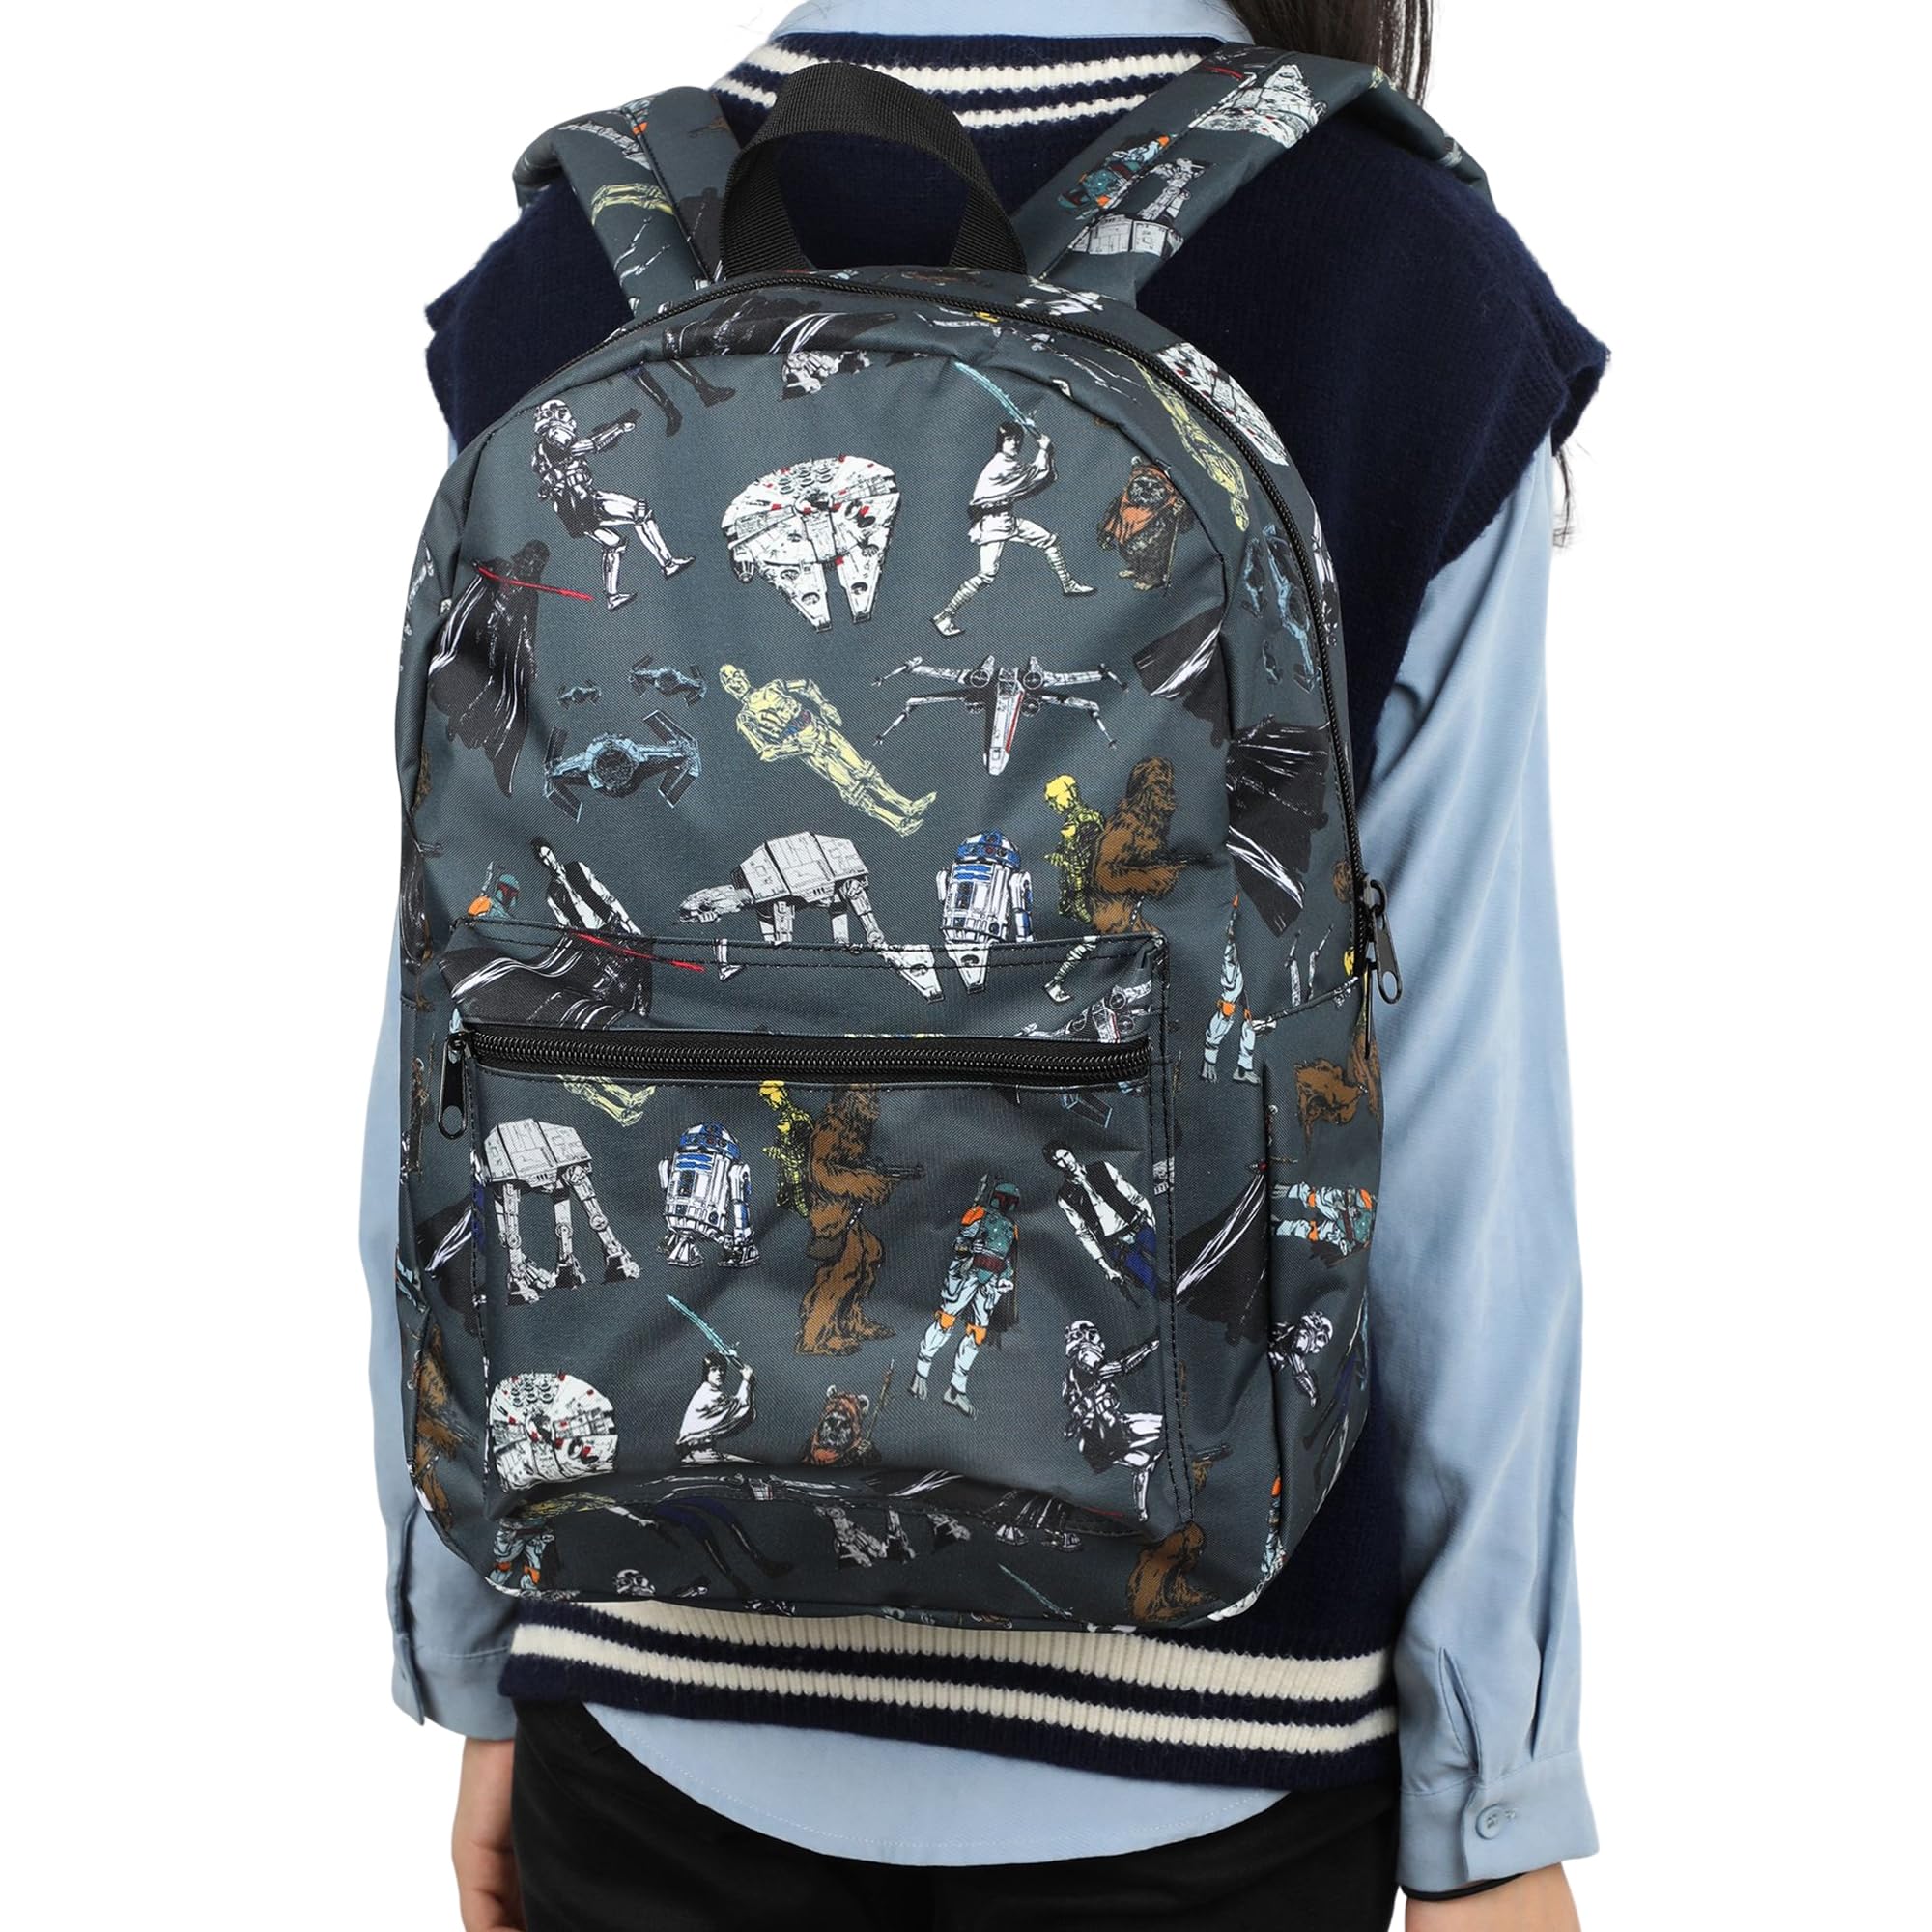 Bioworld Star Wars Multi Character AOP Adult 17" Laptop Backpack